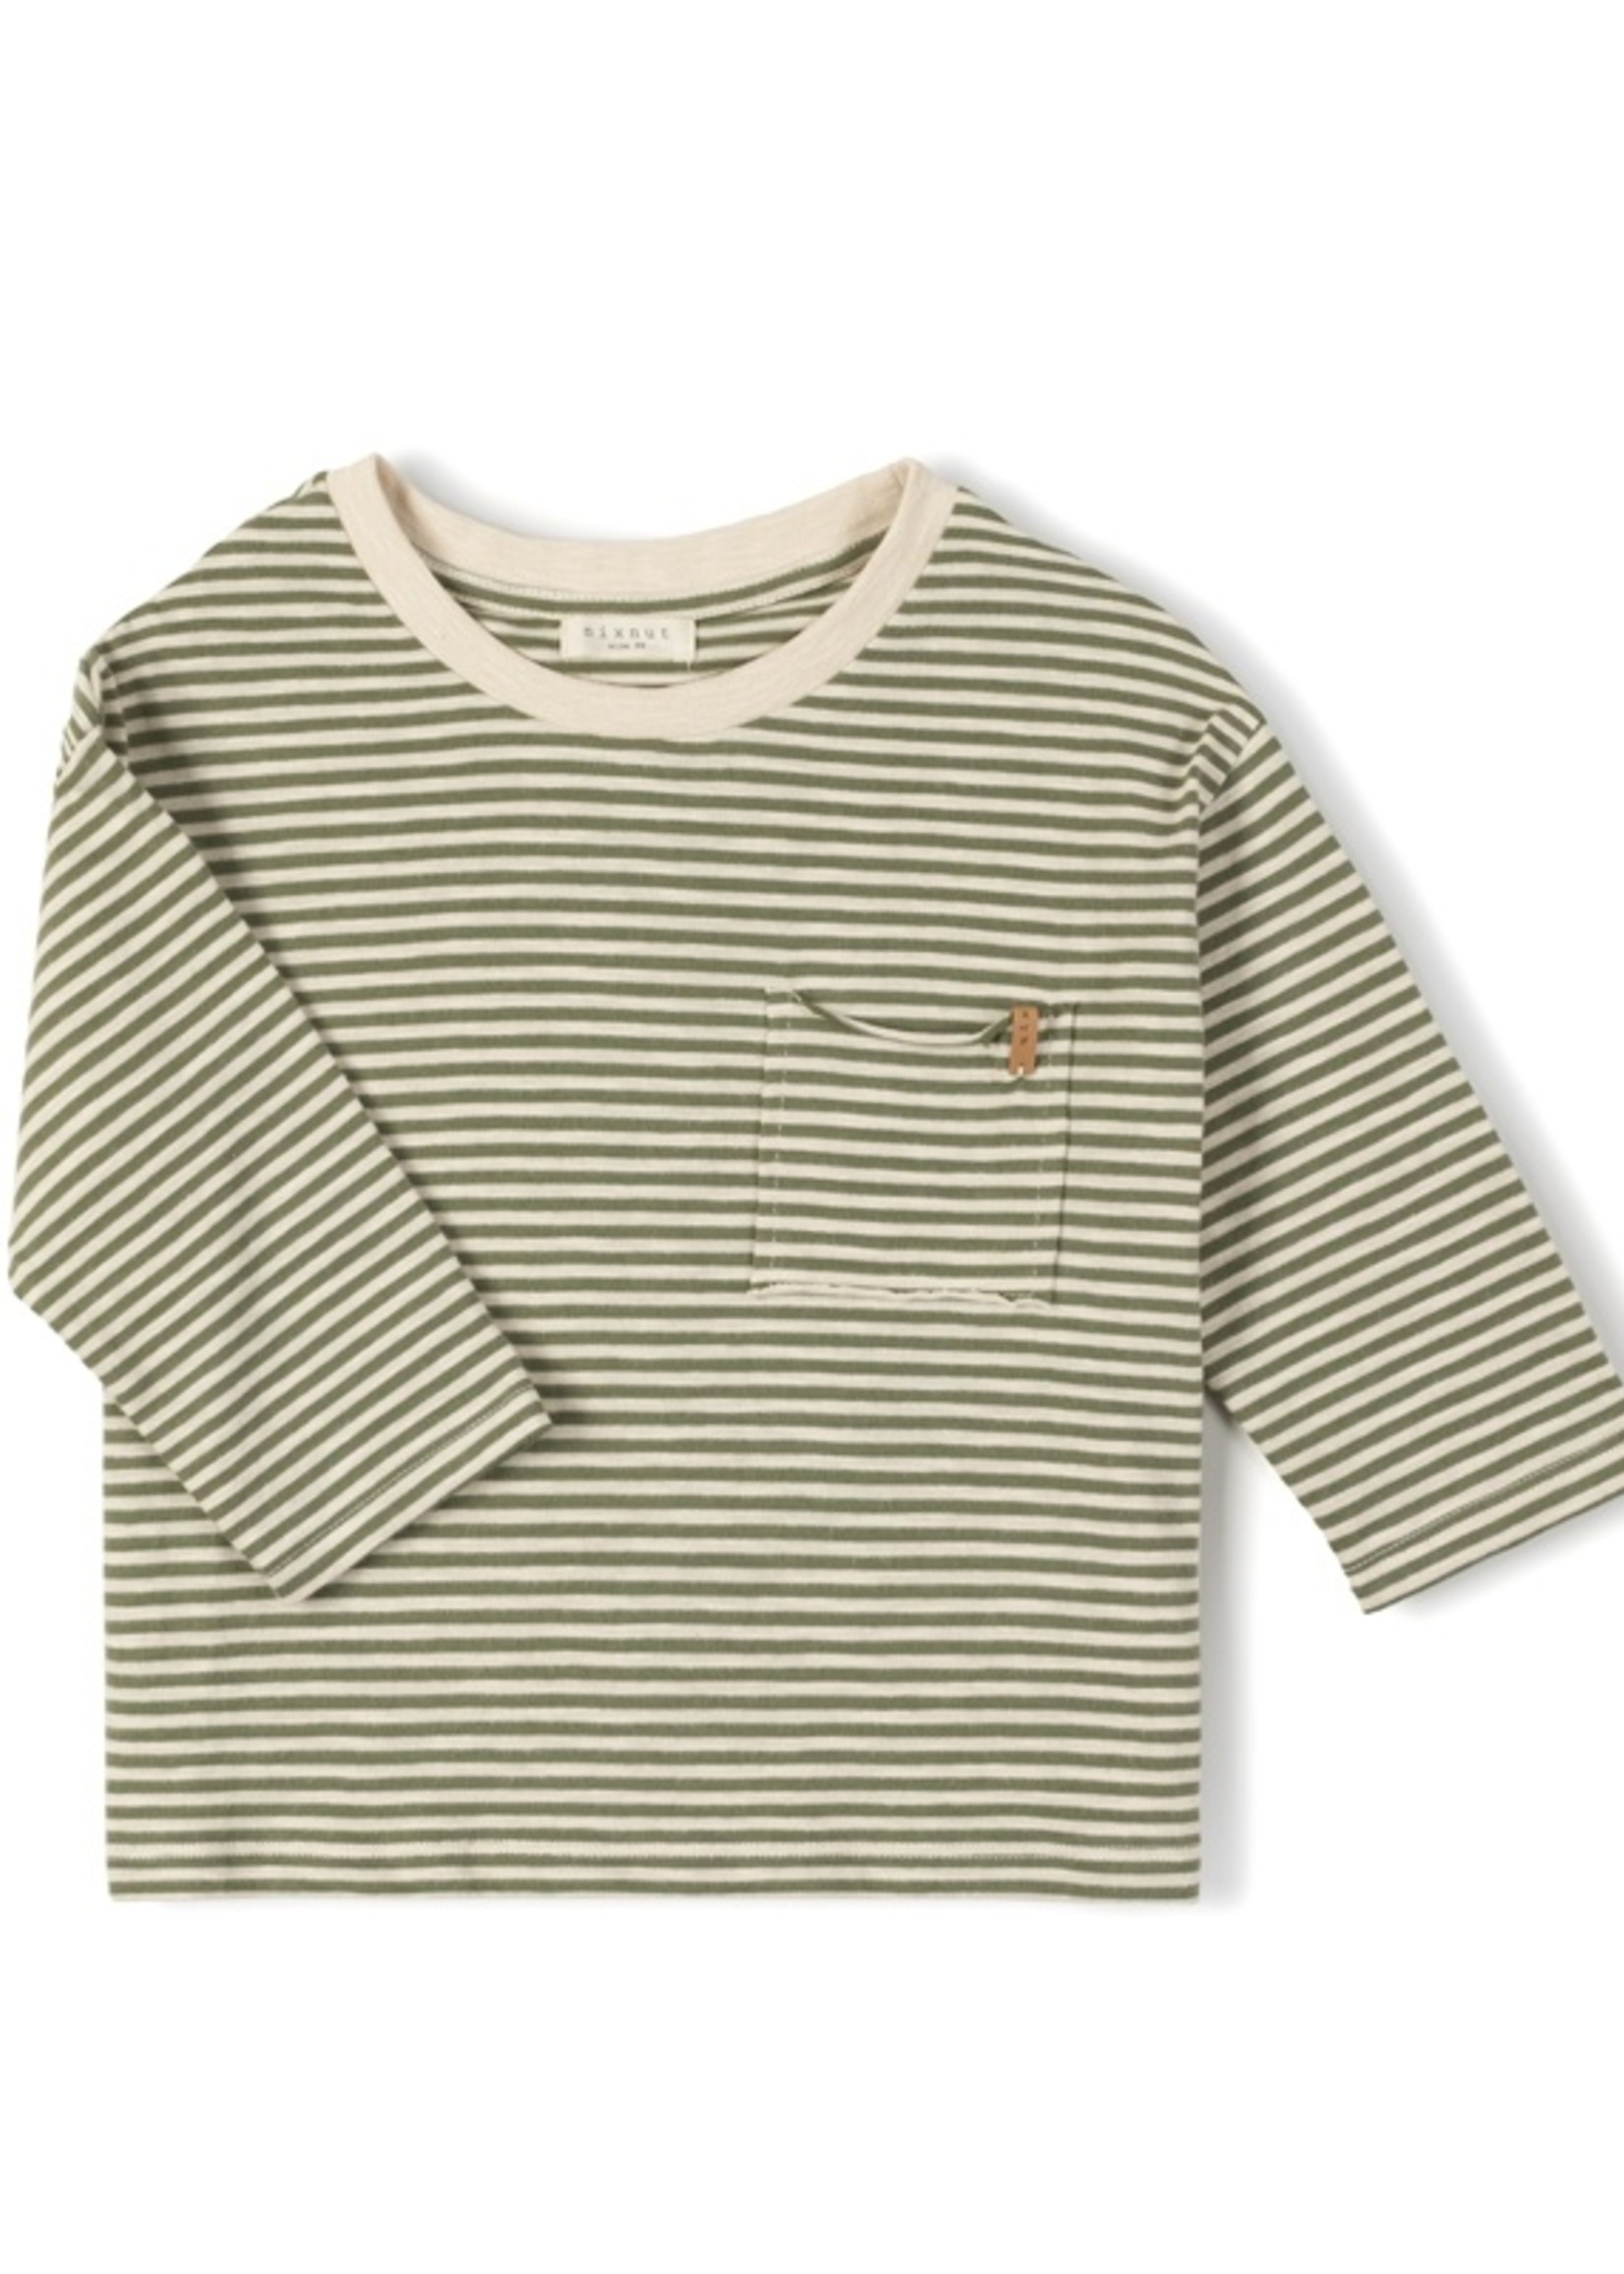 Nixnut Drop Shirt - Khaki Stripe